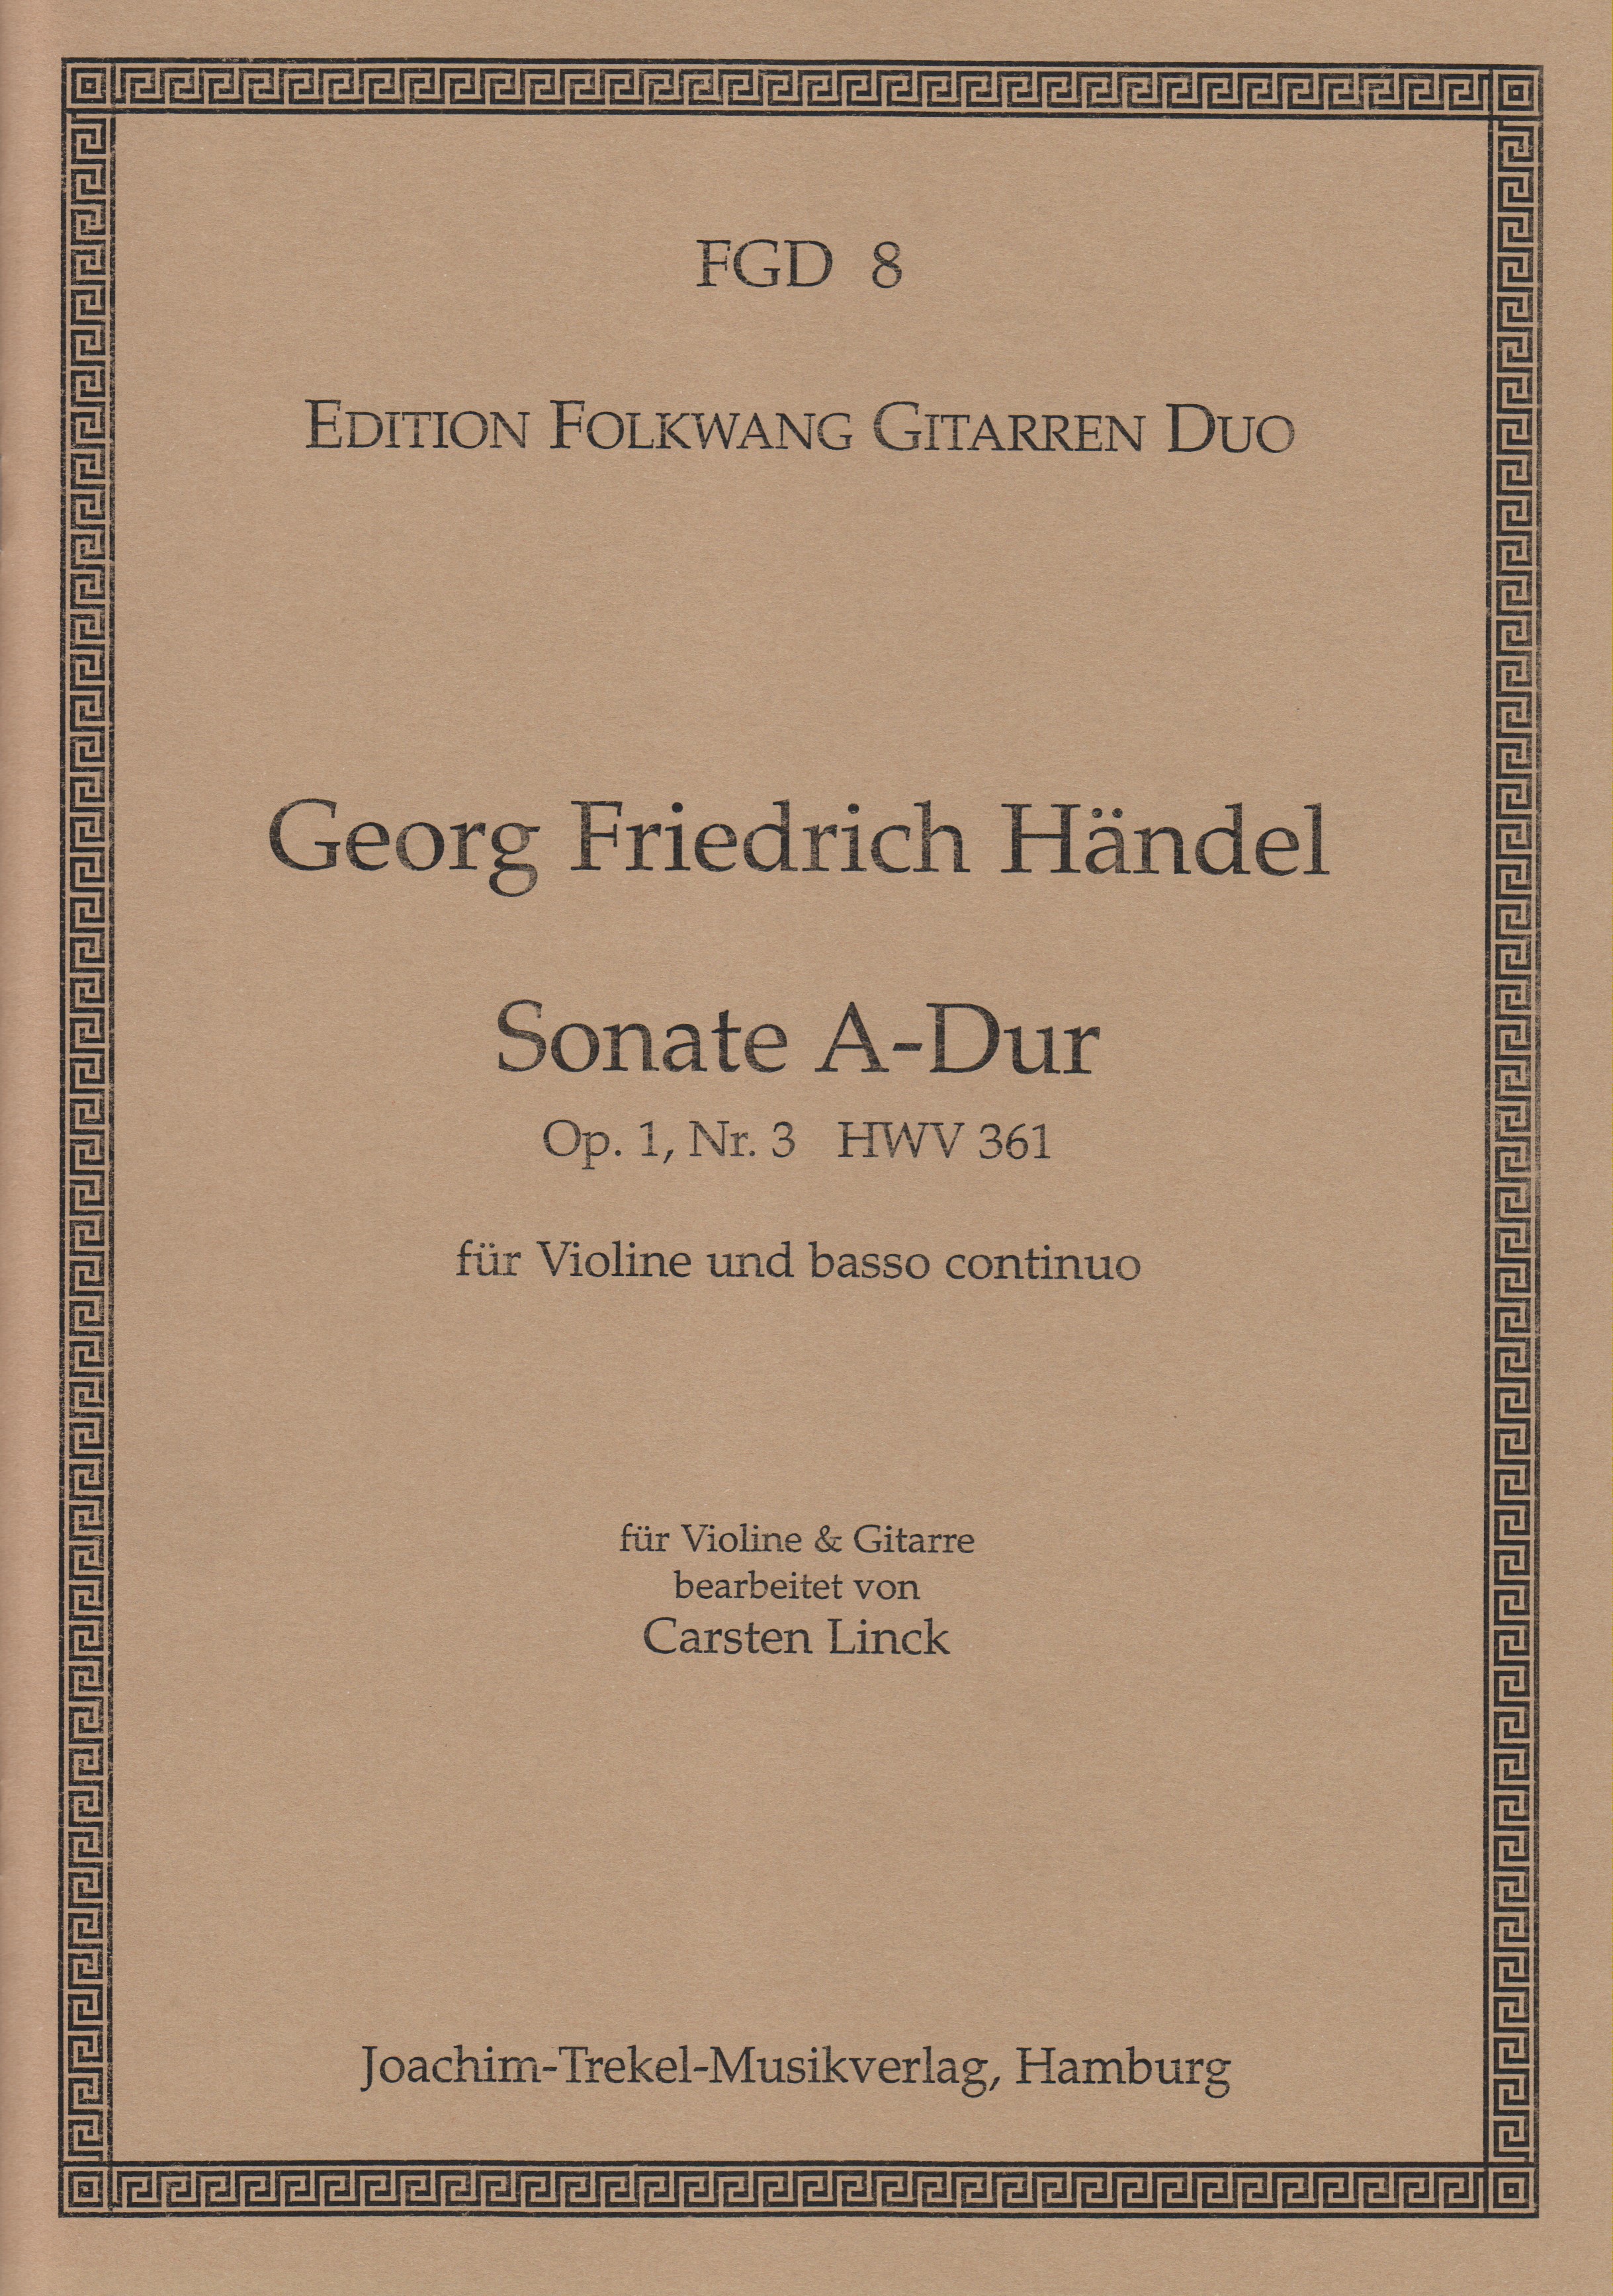 Sonate A-Dur op. 1 Nr. 3, HWV 361